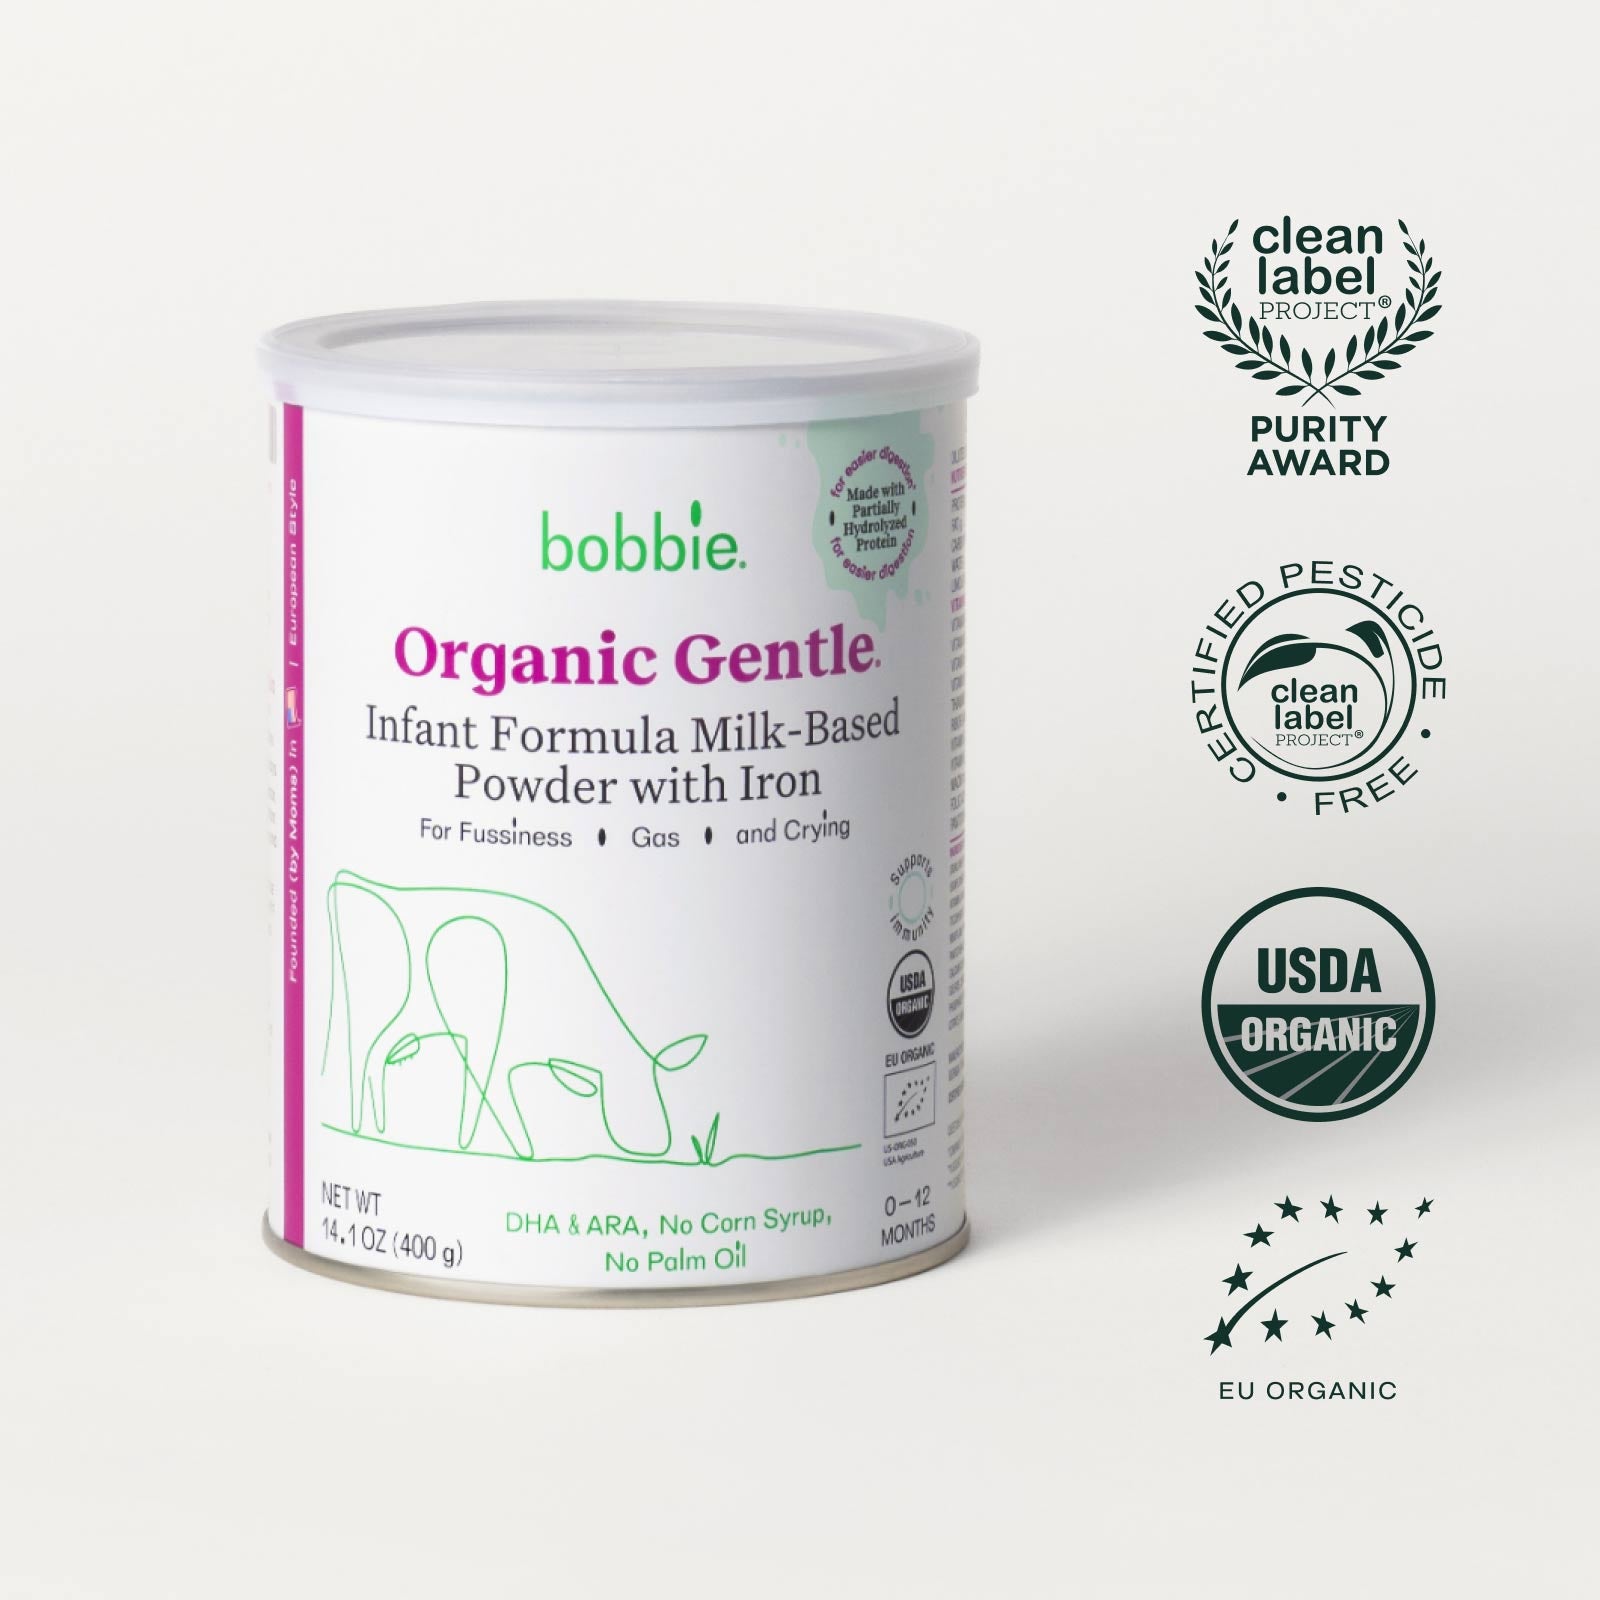 Bobbie Organic Gentle Infant Formula can